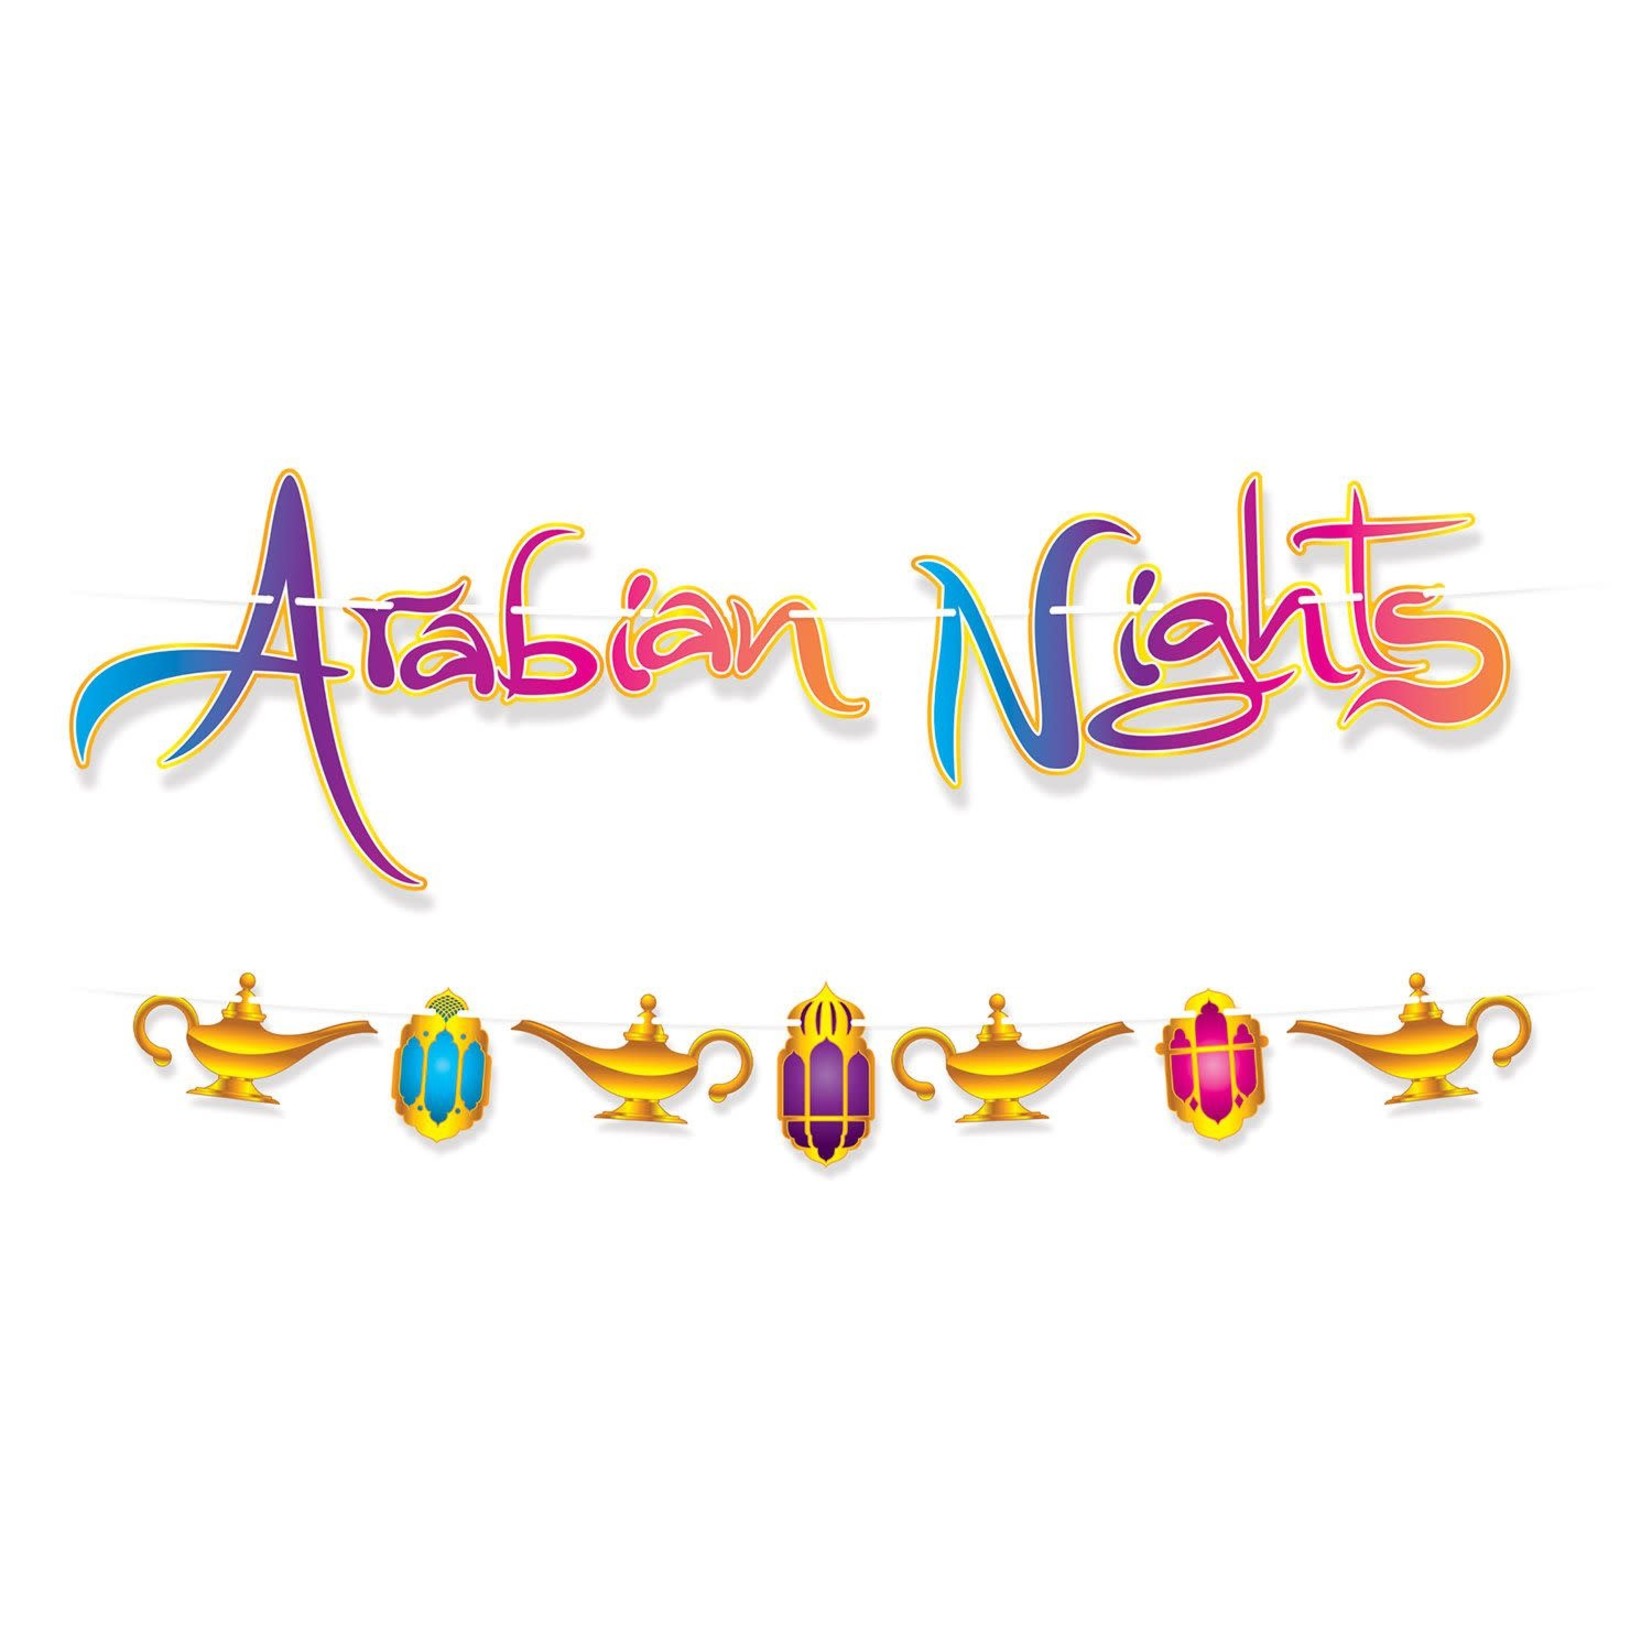 Aladdin Arabian Nights Streamer Set 2 in 1